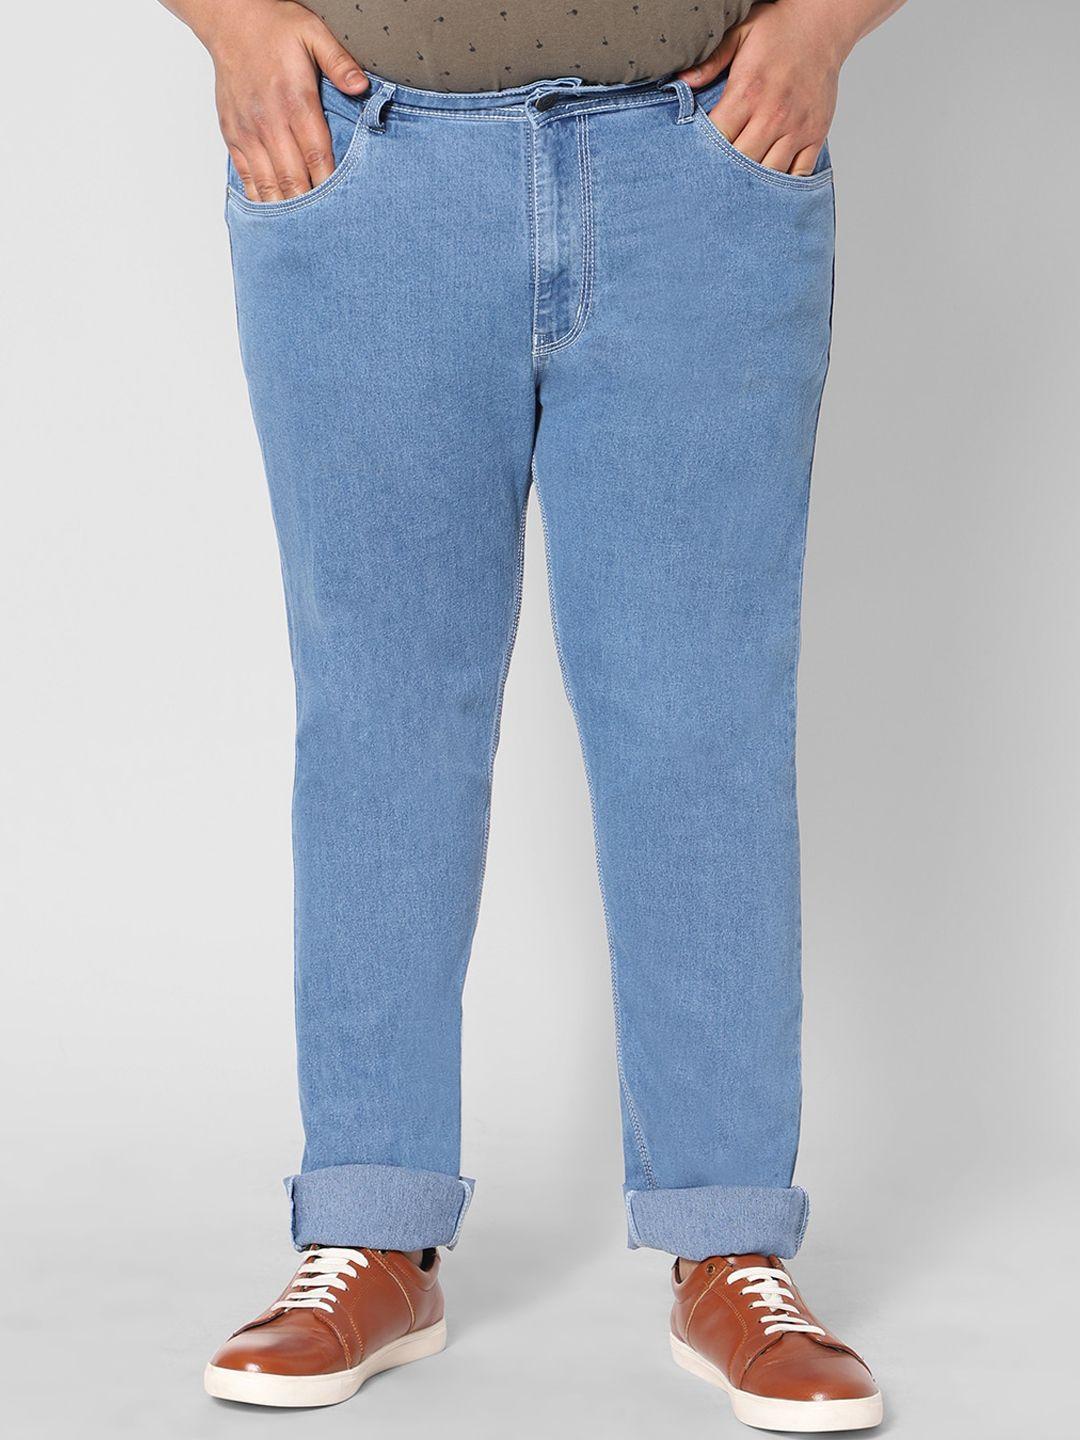 hj hasasi men plus size stretchable cotton jeans